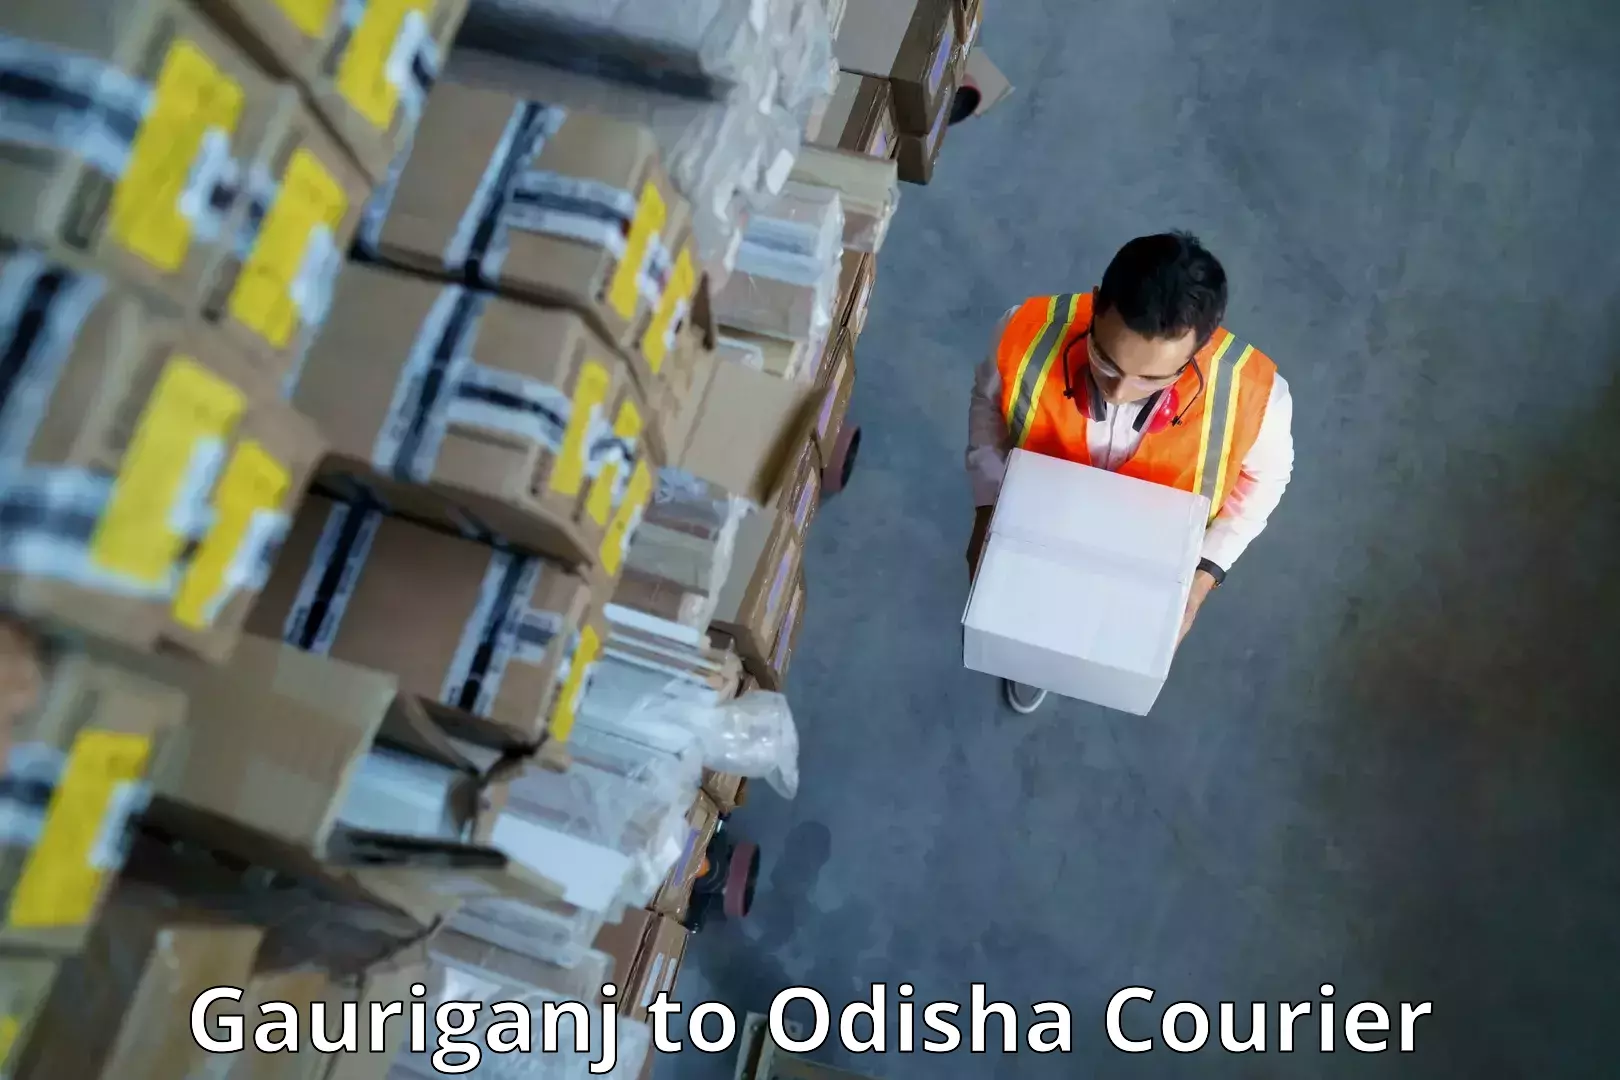 Global courier networks Gauriganj to Odisha